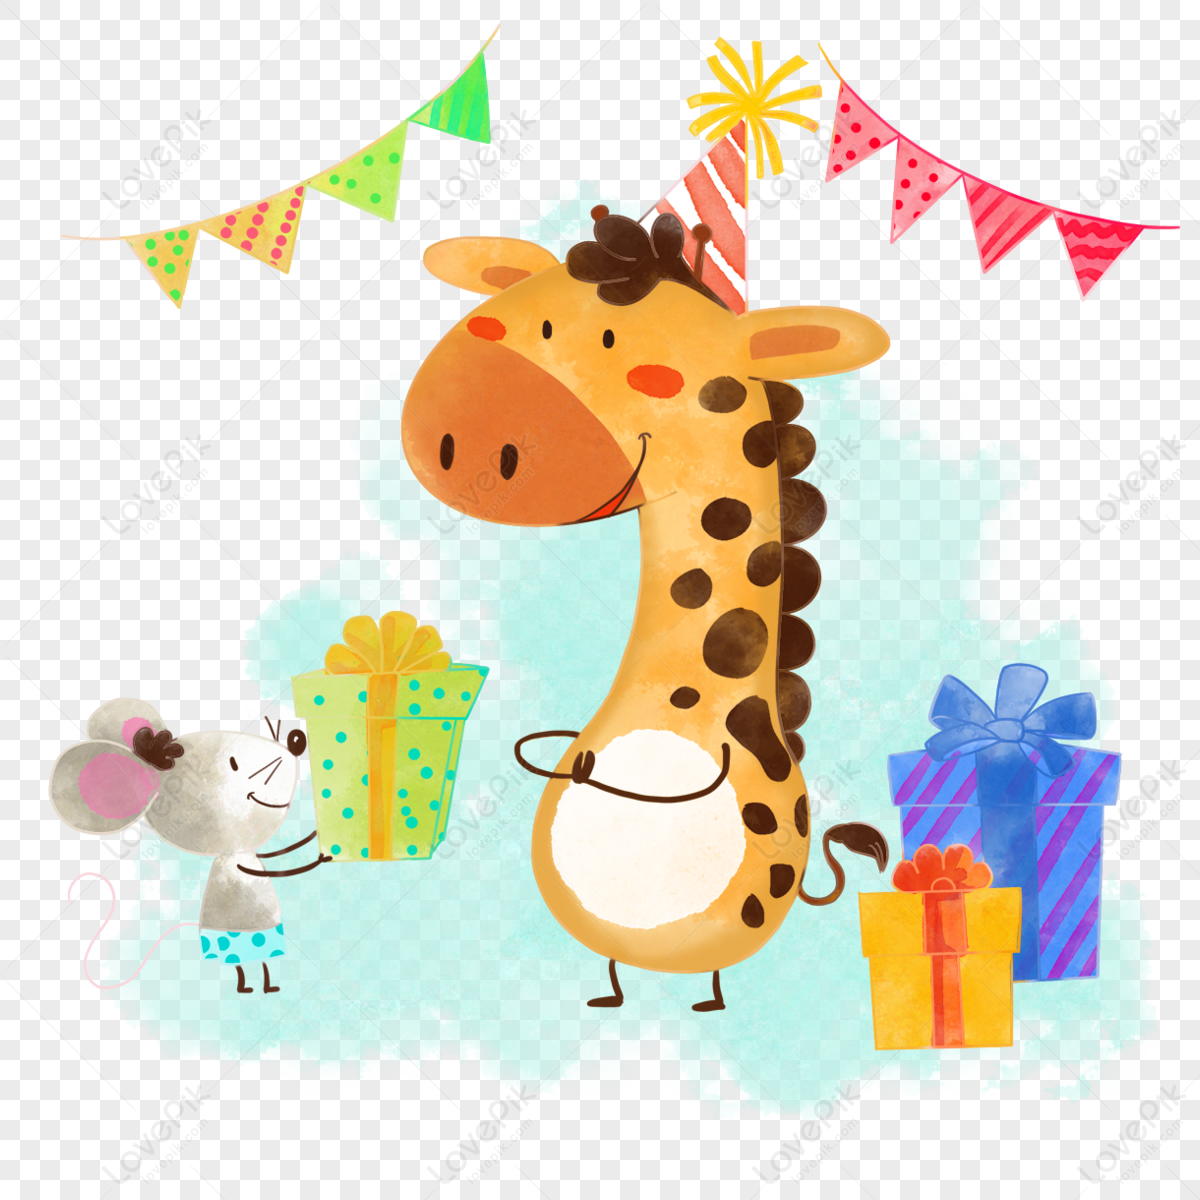 Watercolor cartoon giraffe passed birthday,fun,postcard,animal png white transparent